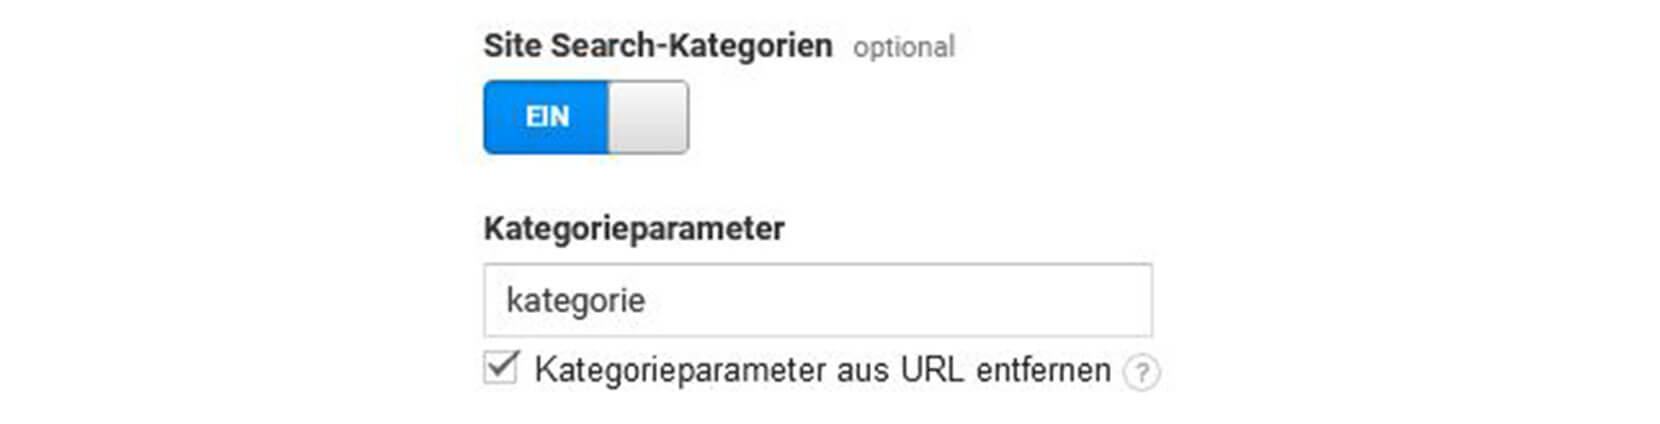 site-search-such-kategorie-parameter-datenansicht